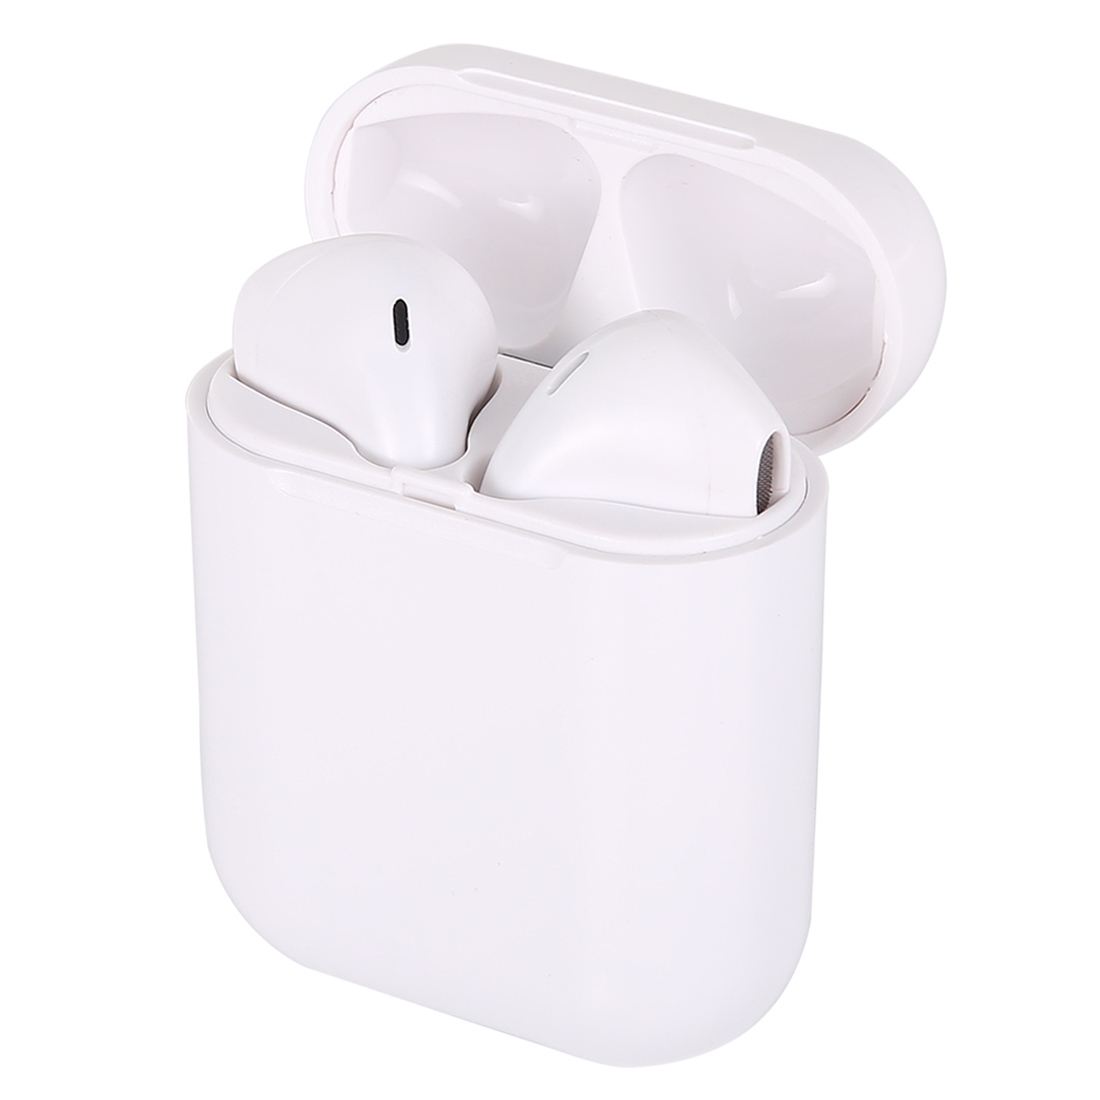 OEM - i12S TWS Trådlösa hörlurar, Bluetooth 5.0 - Vit